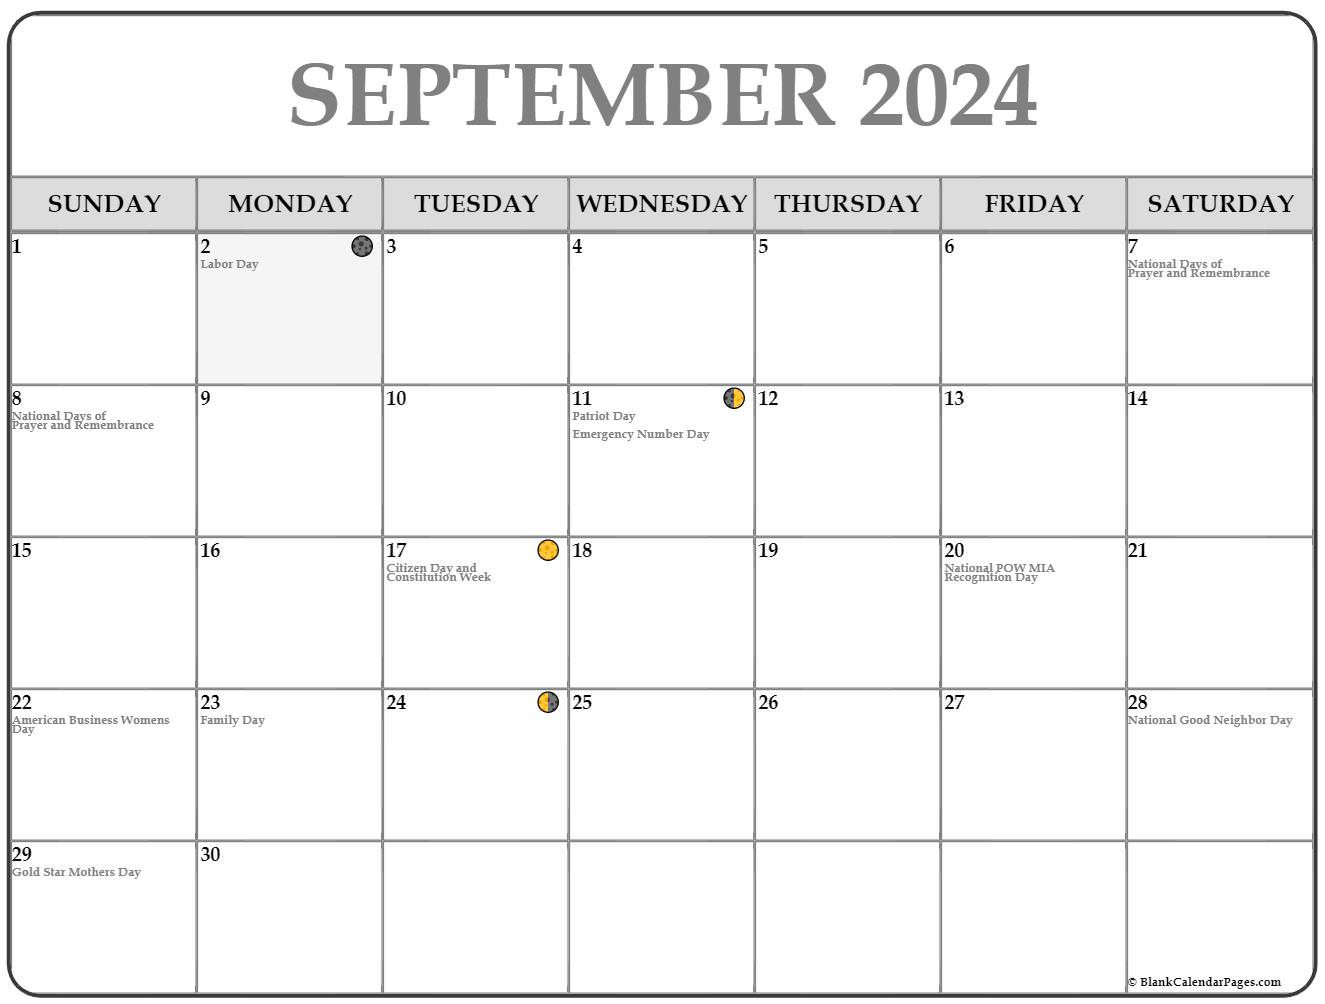 september-2024-lunar-calendar-moon-phase-calendar